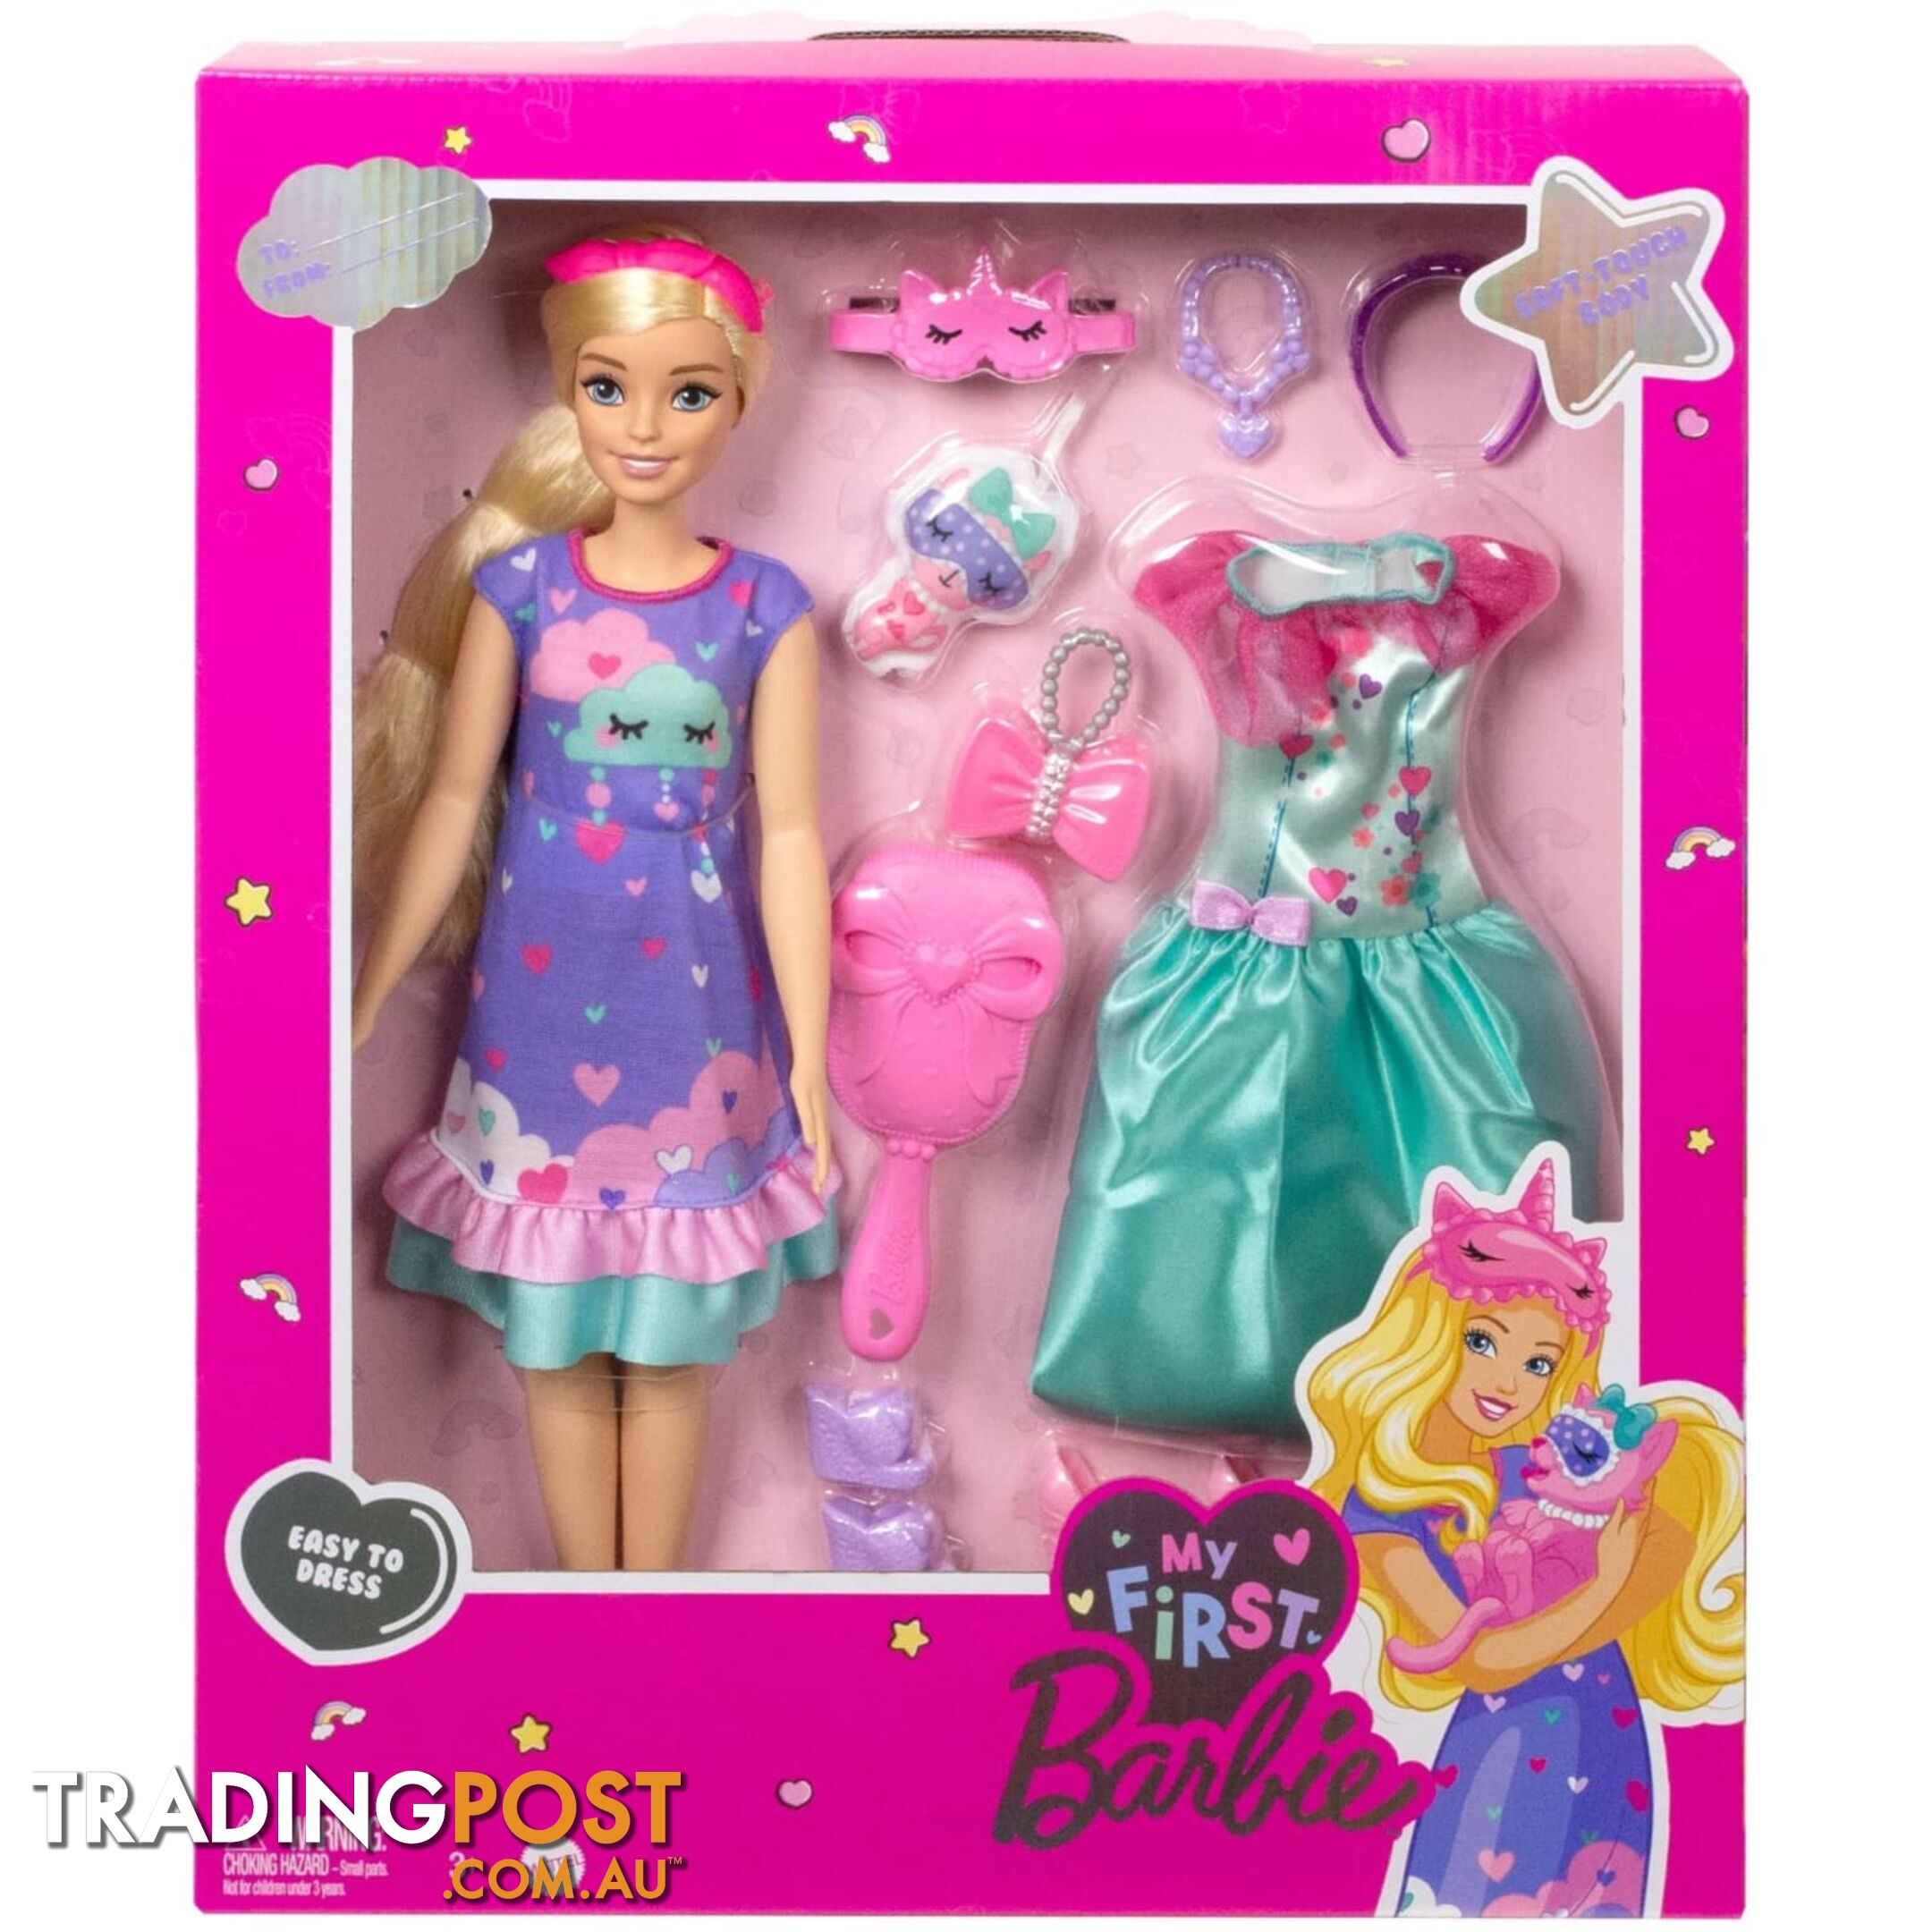 Barbie Doll For Preschoolers My First Barbie Deluxe Blonde - Mahmm66 - 194735131662